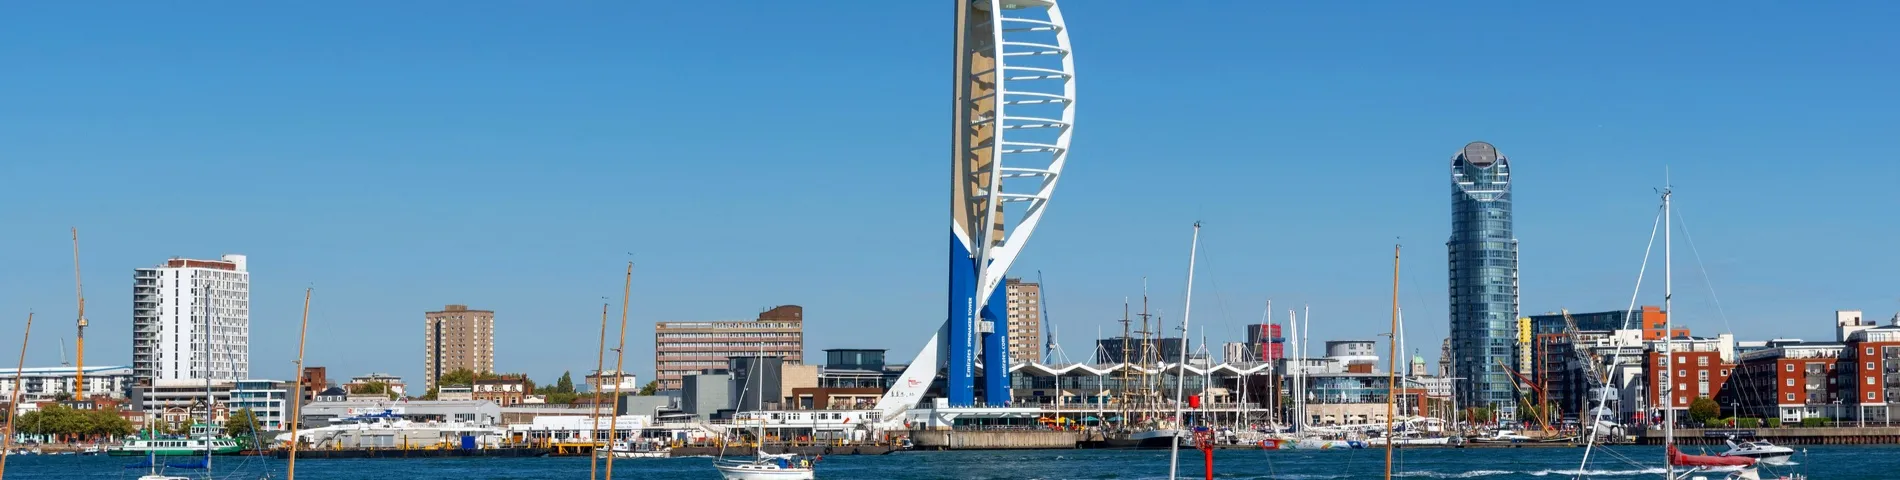 Portsmouth - Standardkurs*